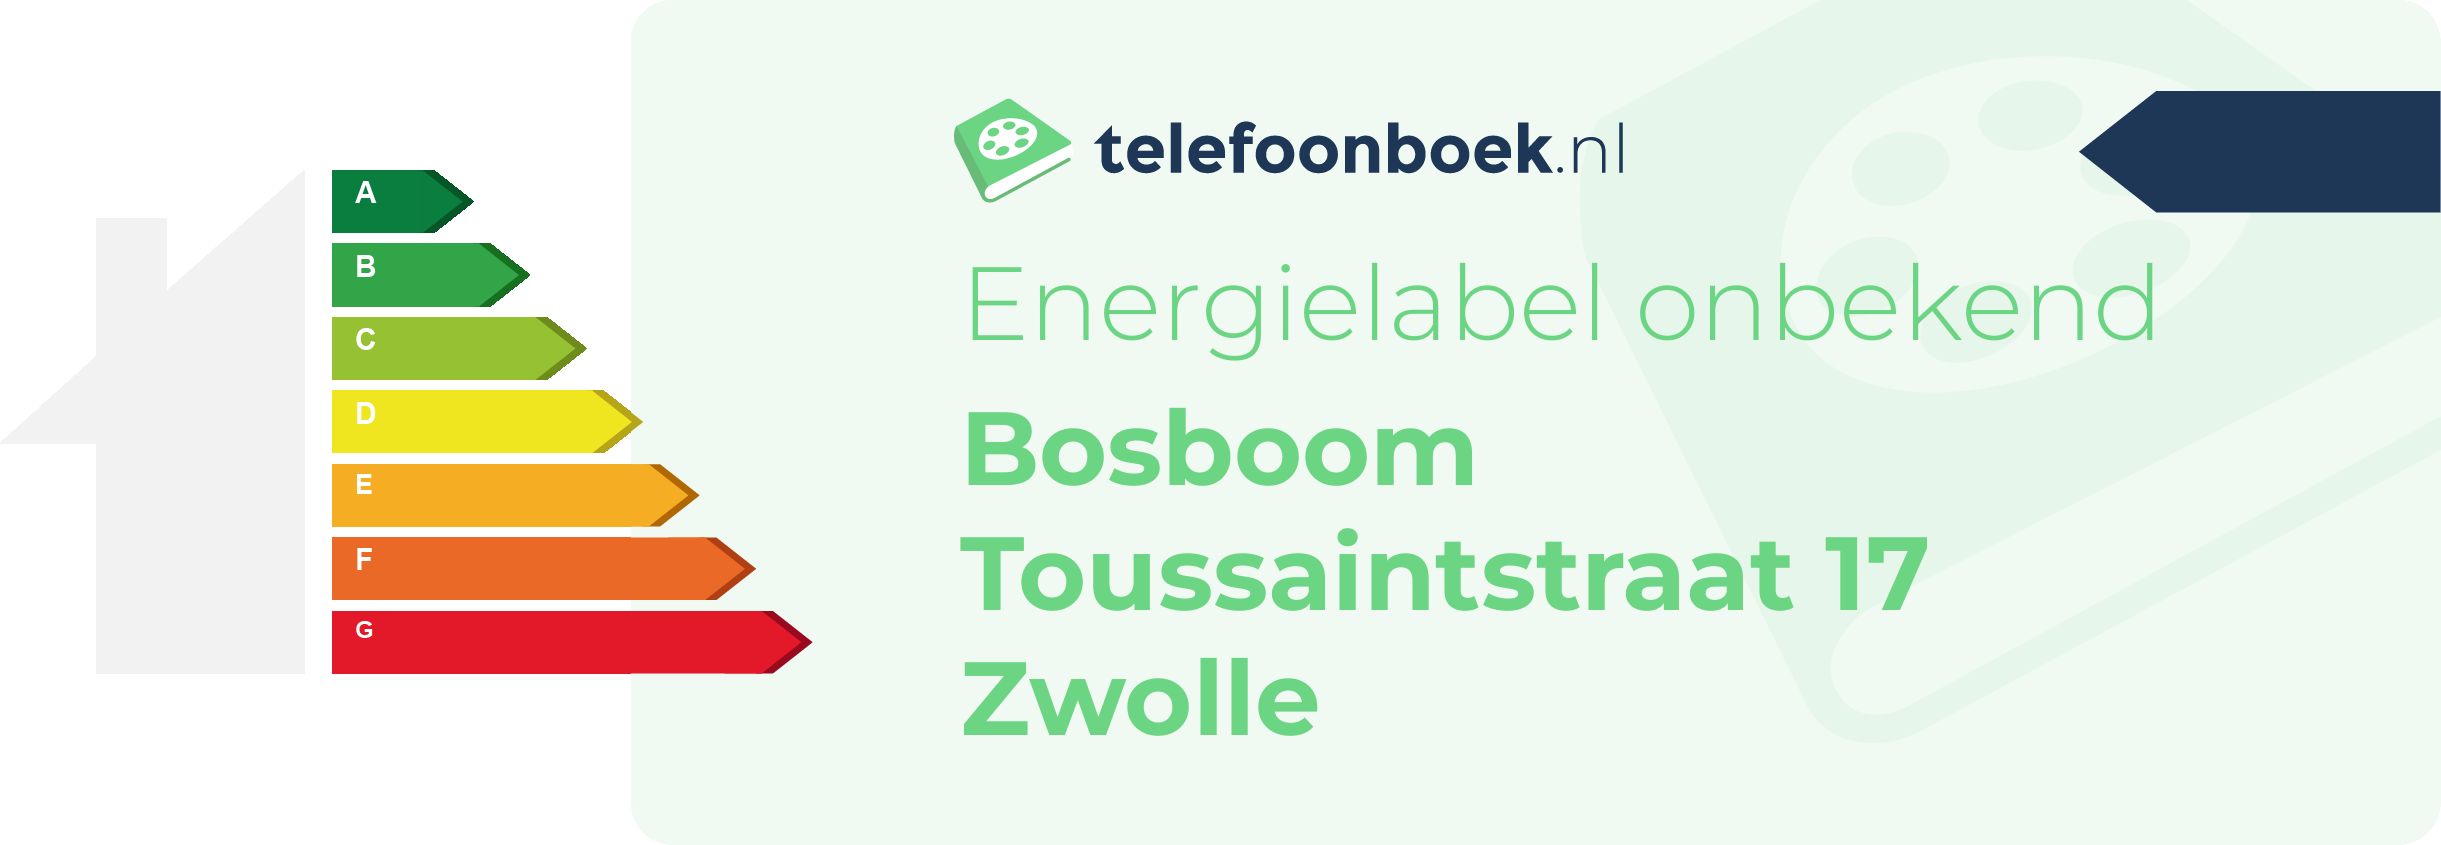 Energielabel Bosboom Toussaintstraat 17 Zwolle